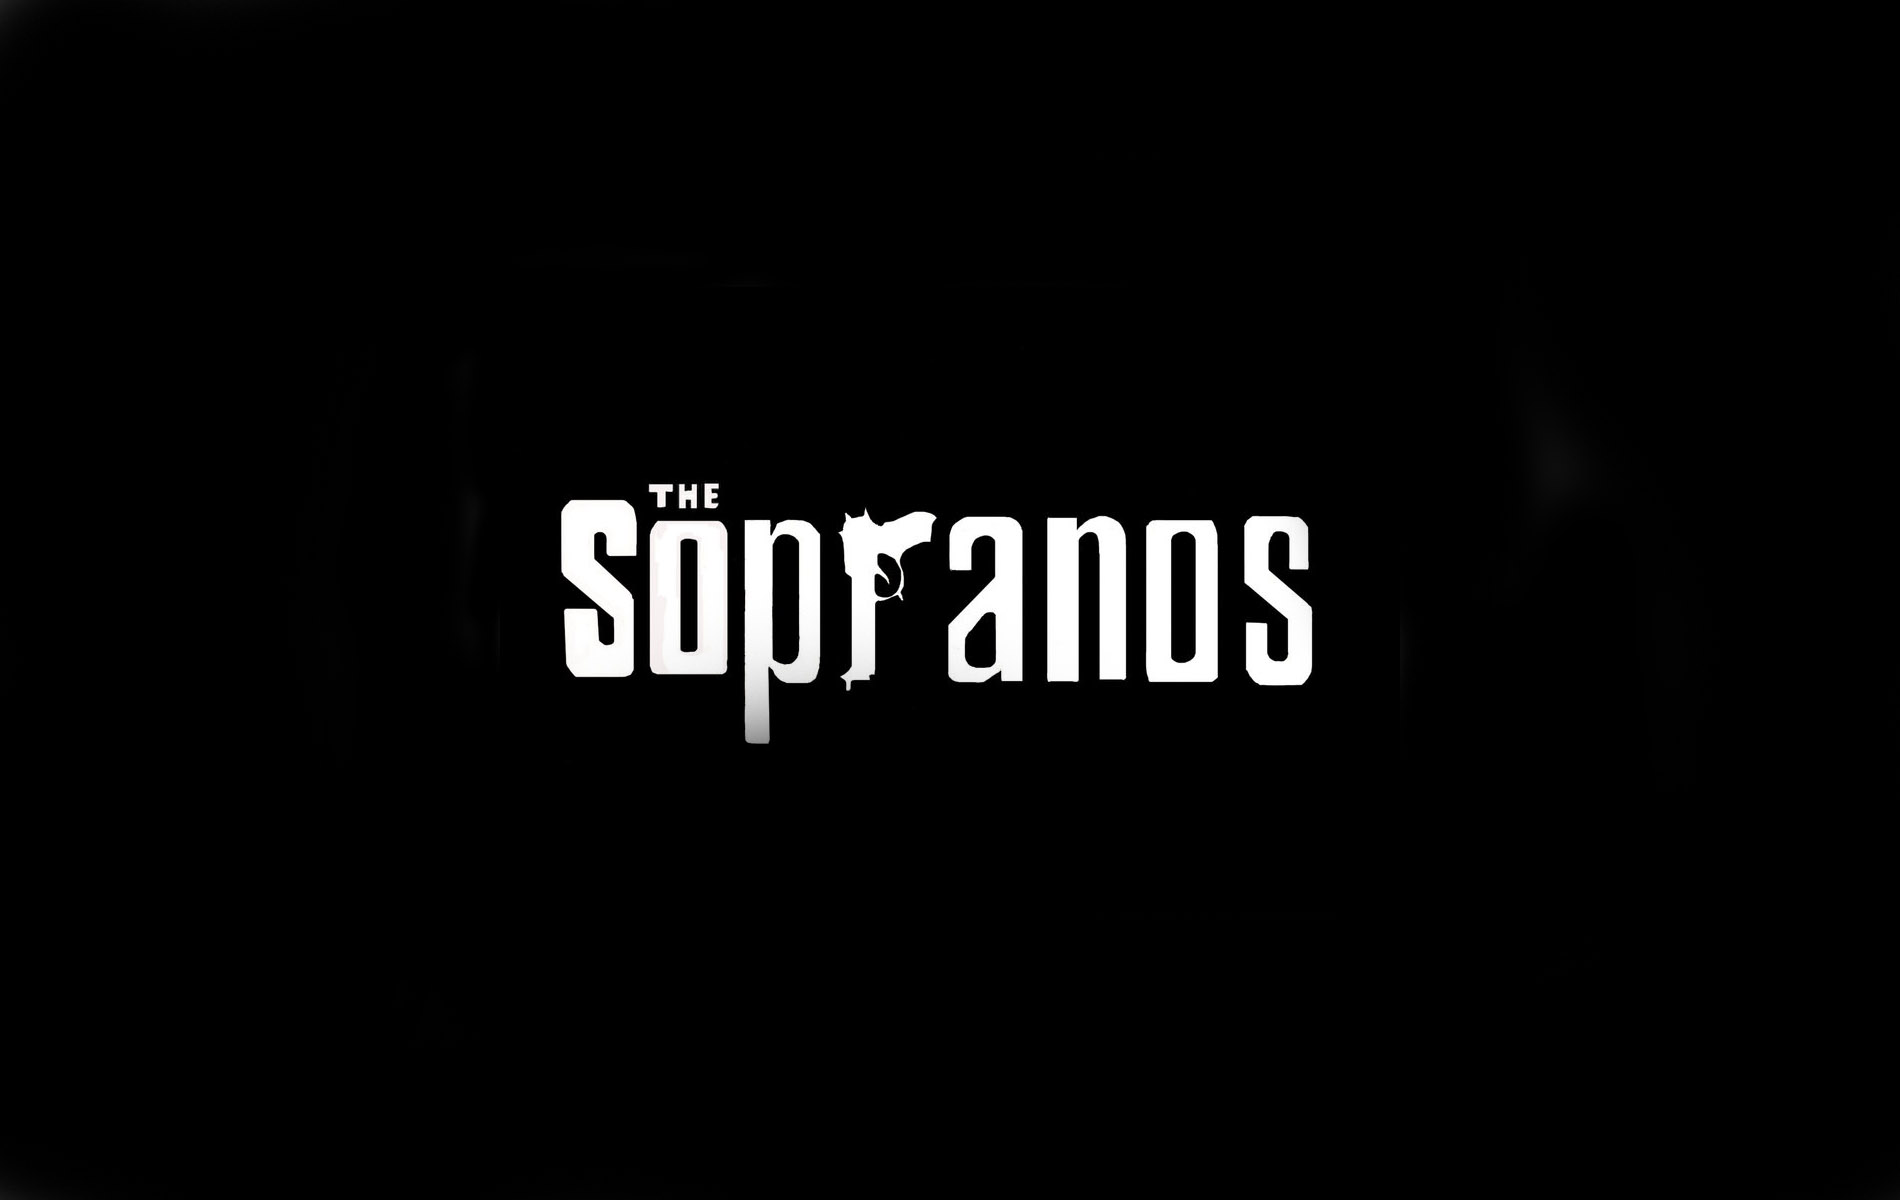 The Sopranos HD Wallpaper For Desktop